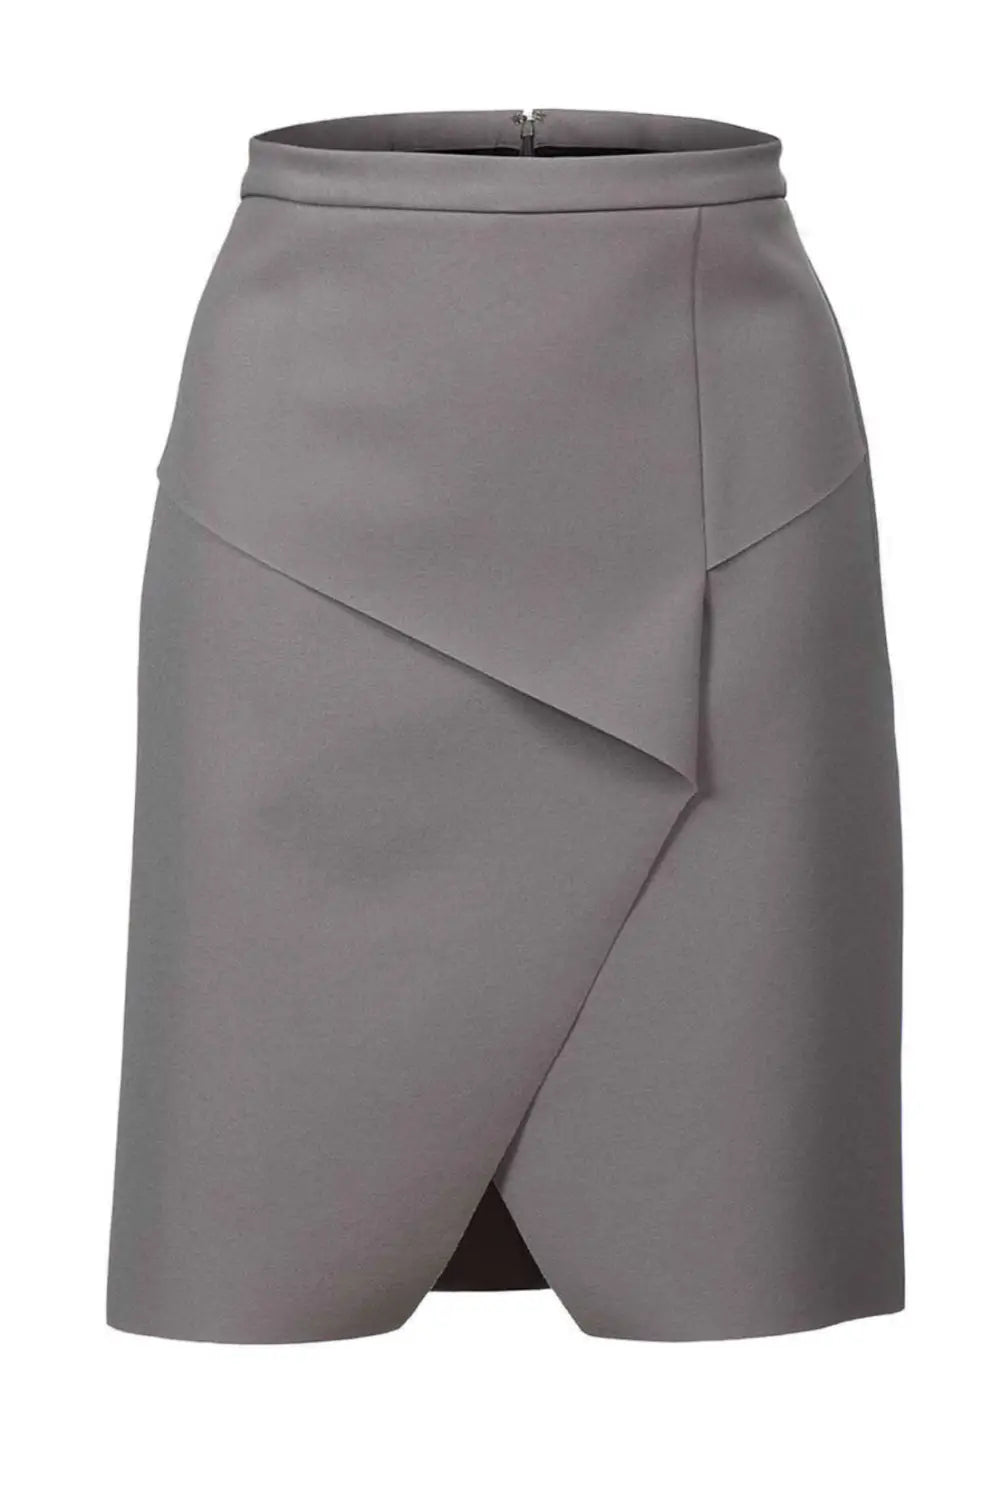 Topshop Wrap Front Skirt